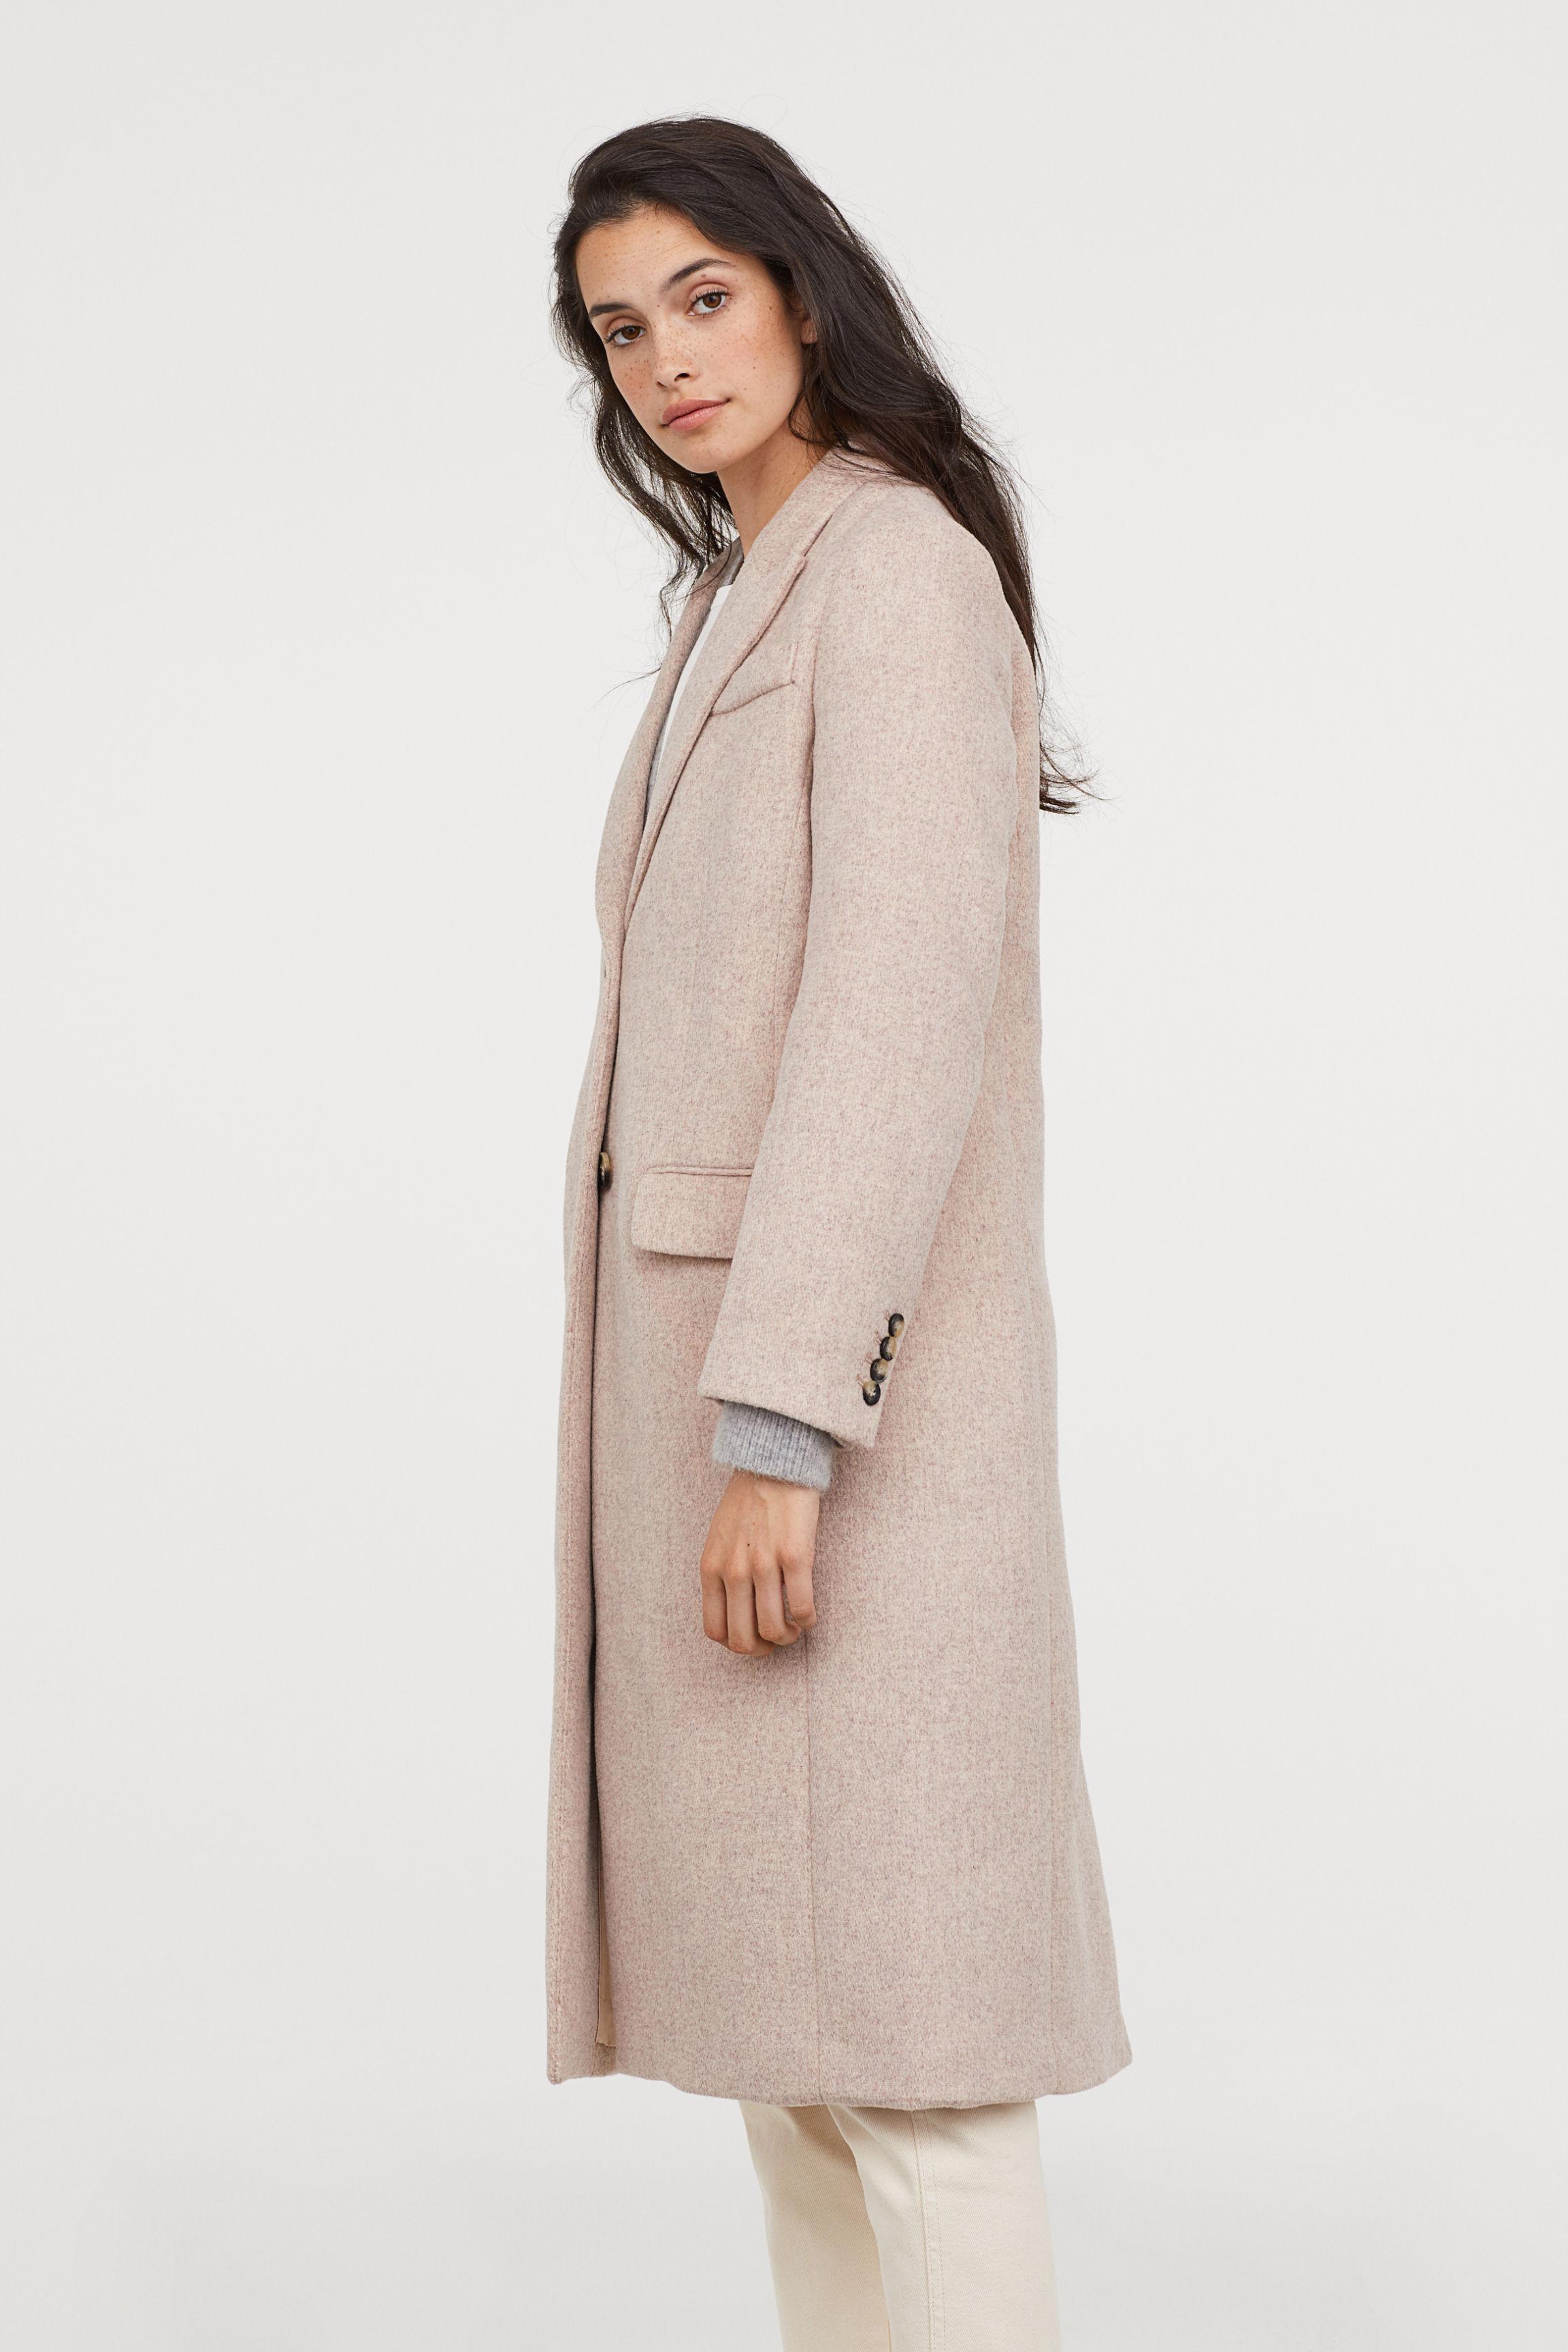 H&M Wool-blend Coat in Natural | Lyst Canada